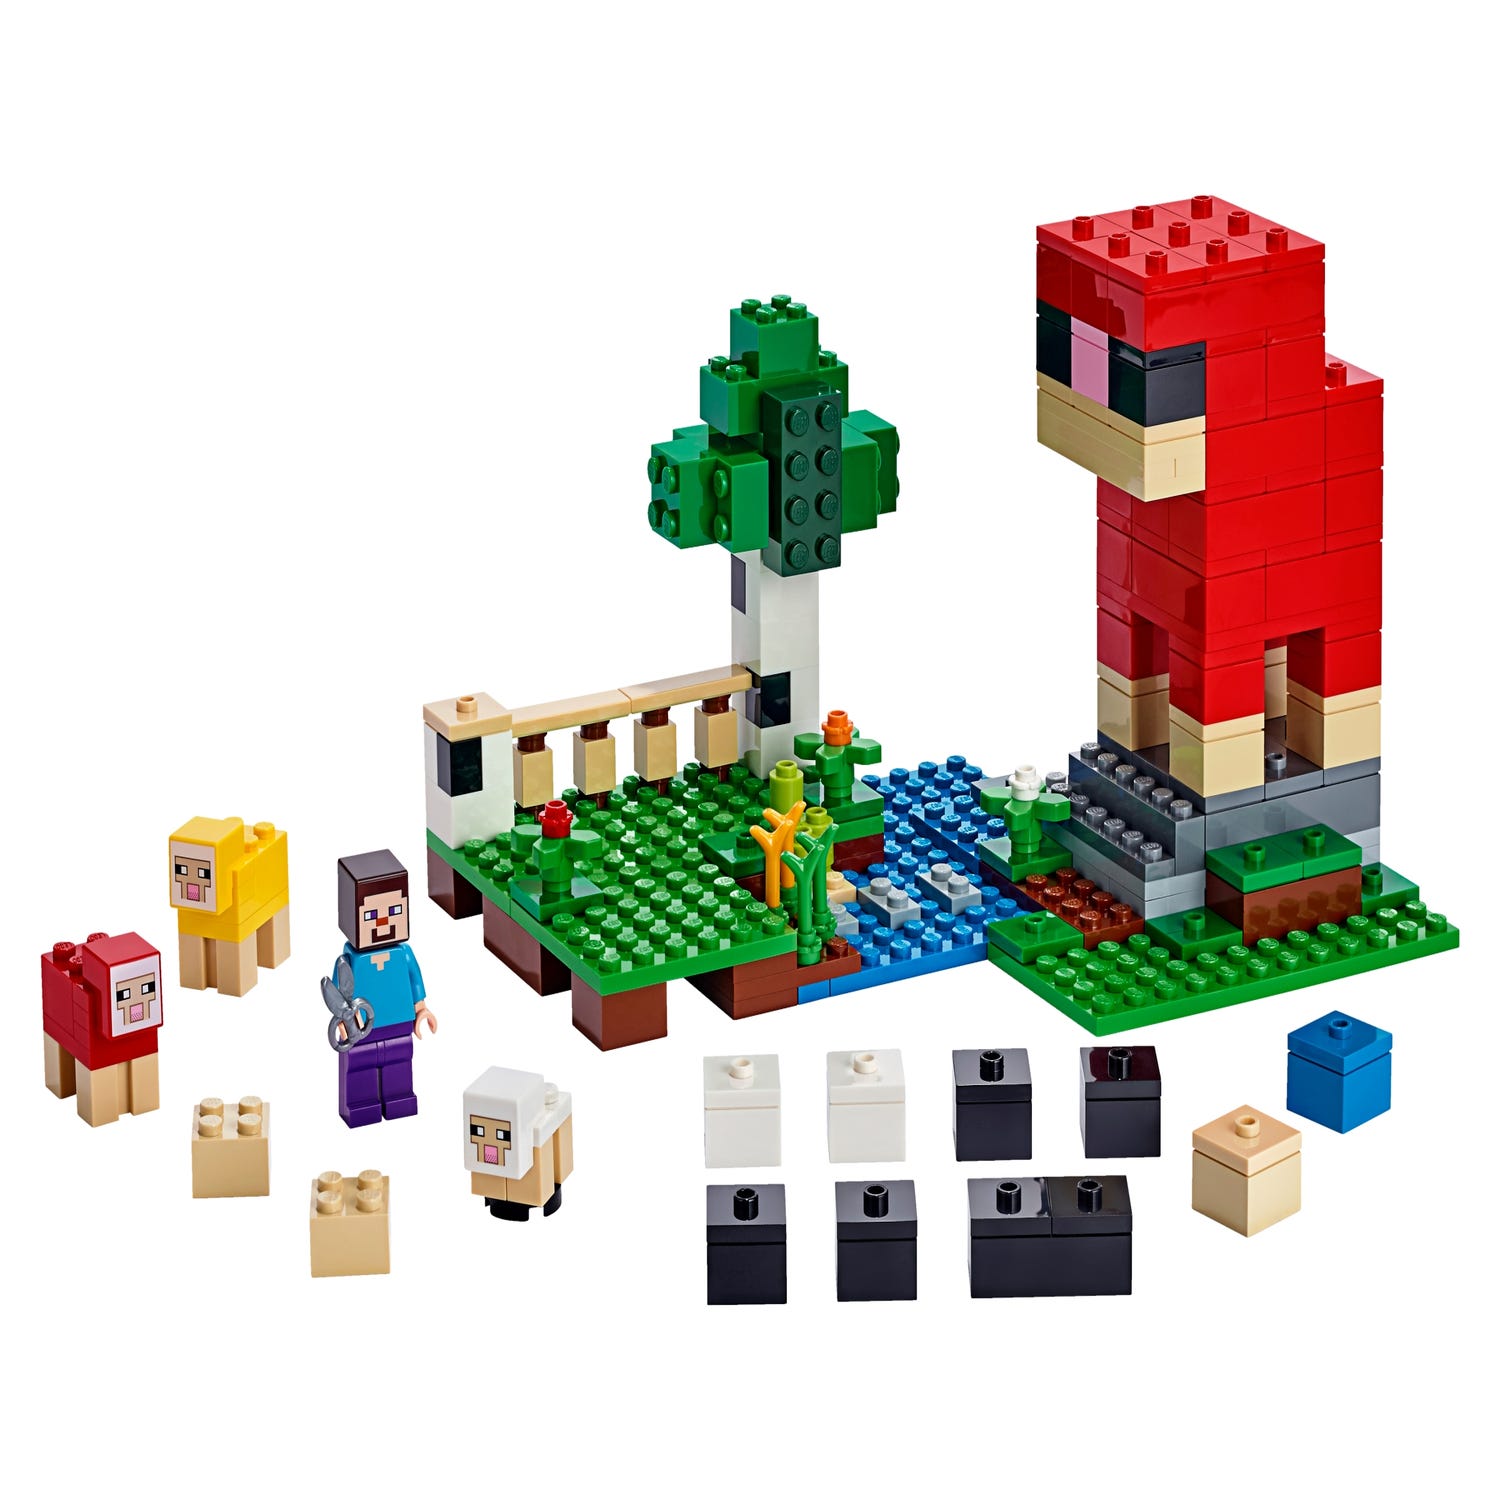 The Wool Farm 21153 | Minecraft® | Buy online at LEGO® Shop US